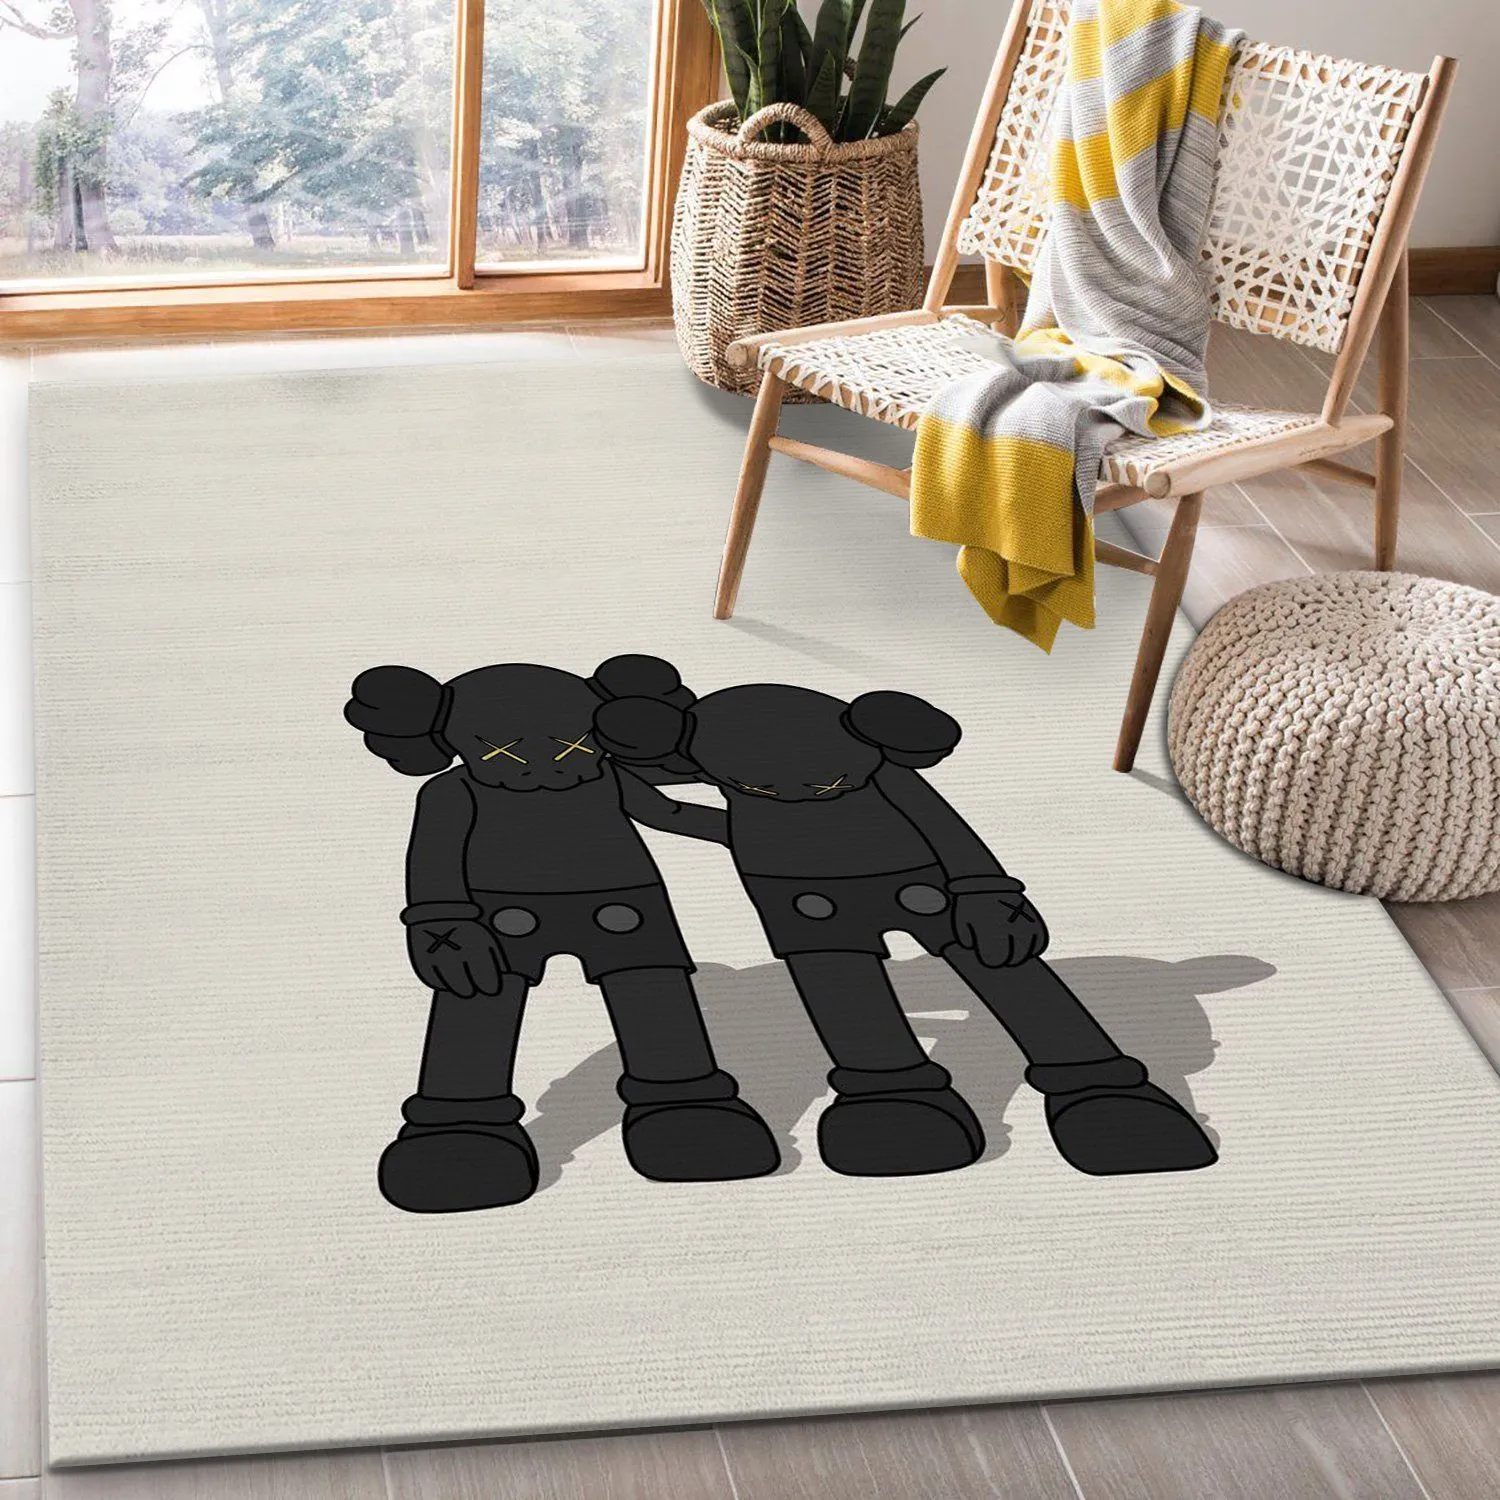 Kaws along the way black Rectangle Rug Fashion Brand Home Decor Door Mat Area Carpet Luxury